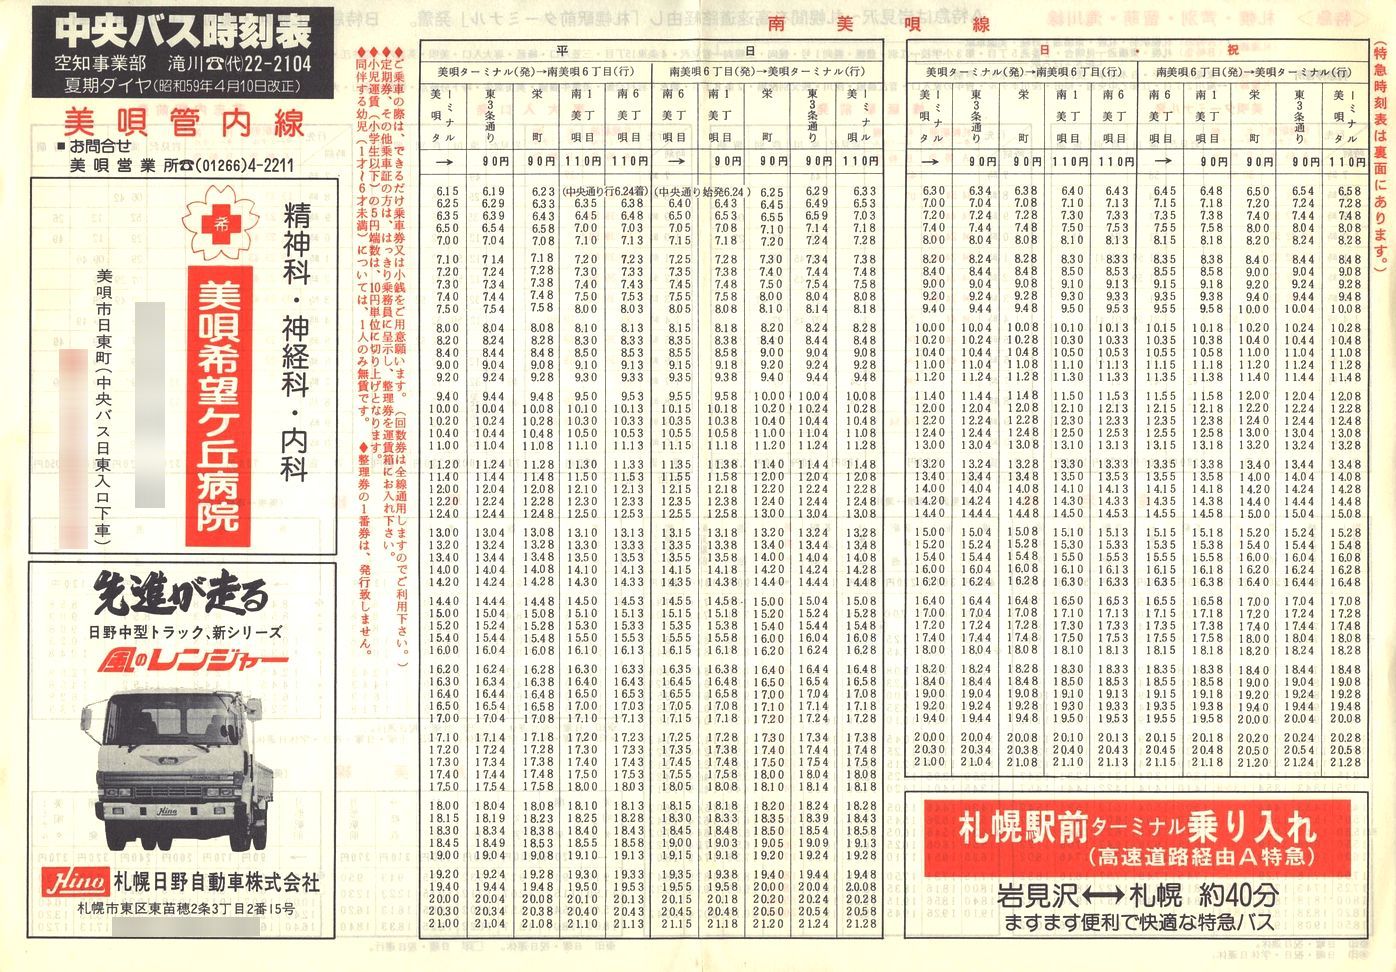 1984-04-10_kCoX(m)_SǓ\\